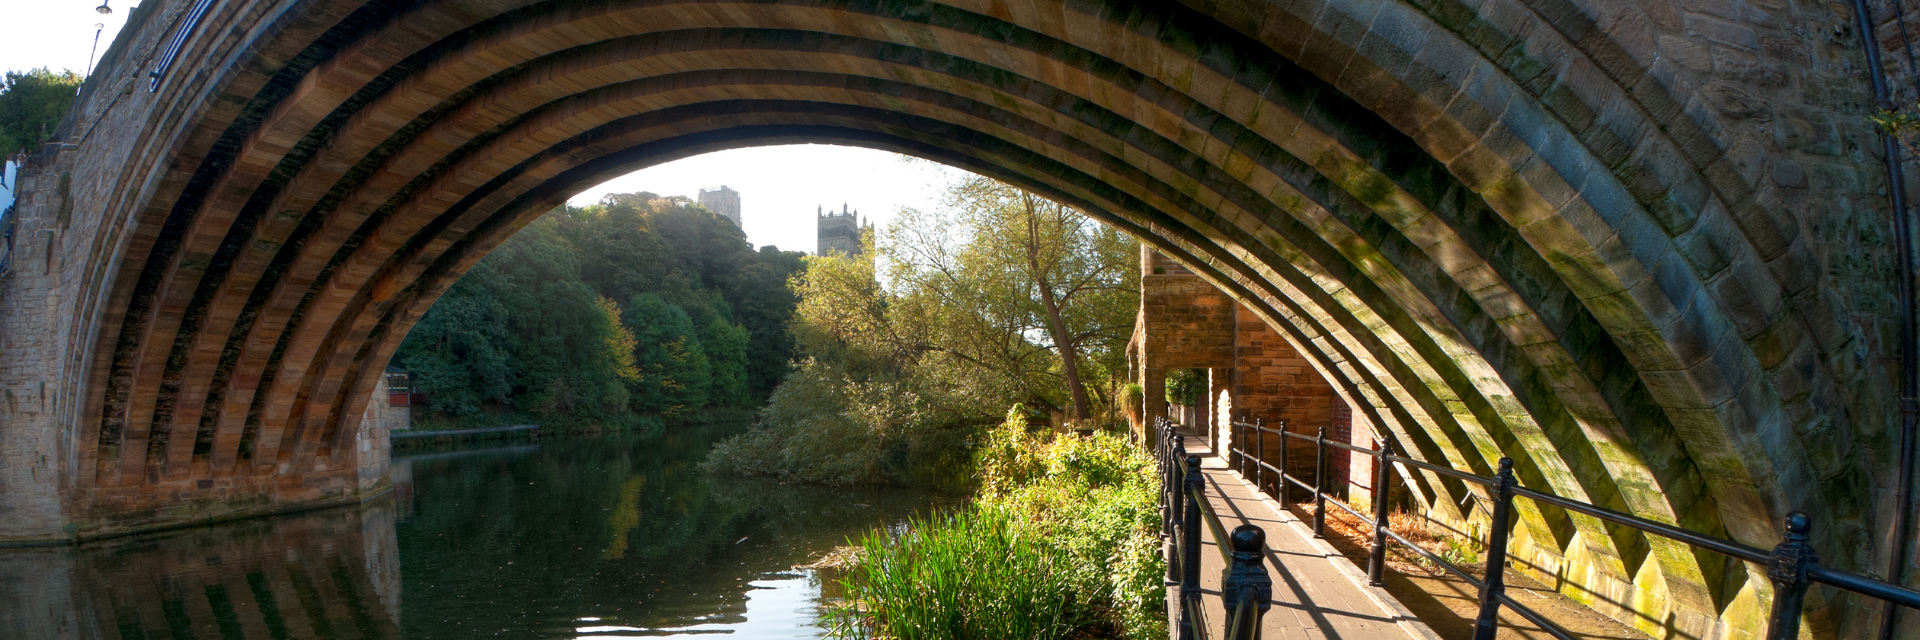 View under a bridge in Durham along River Wear